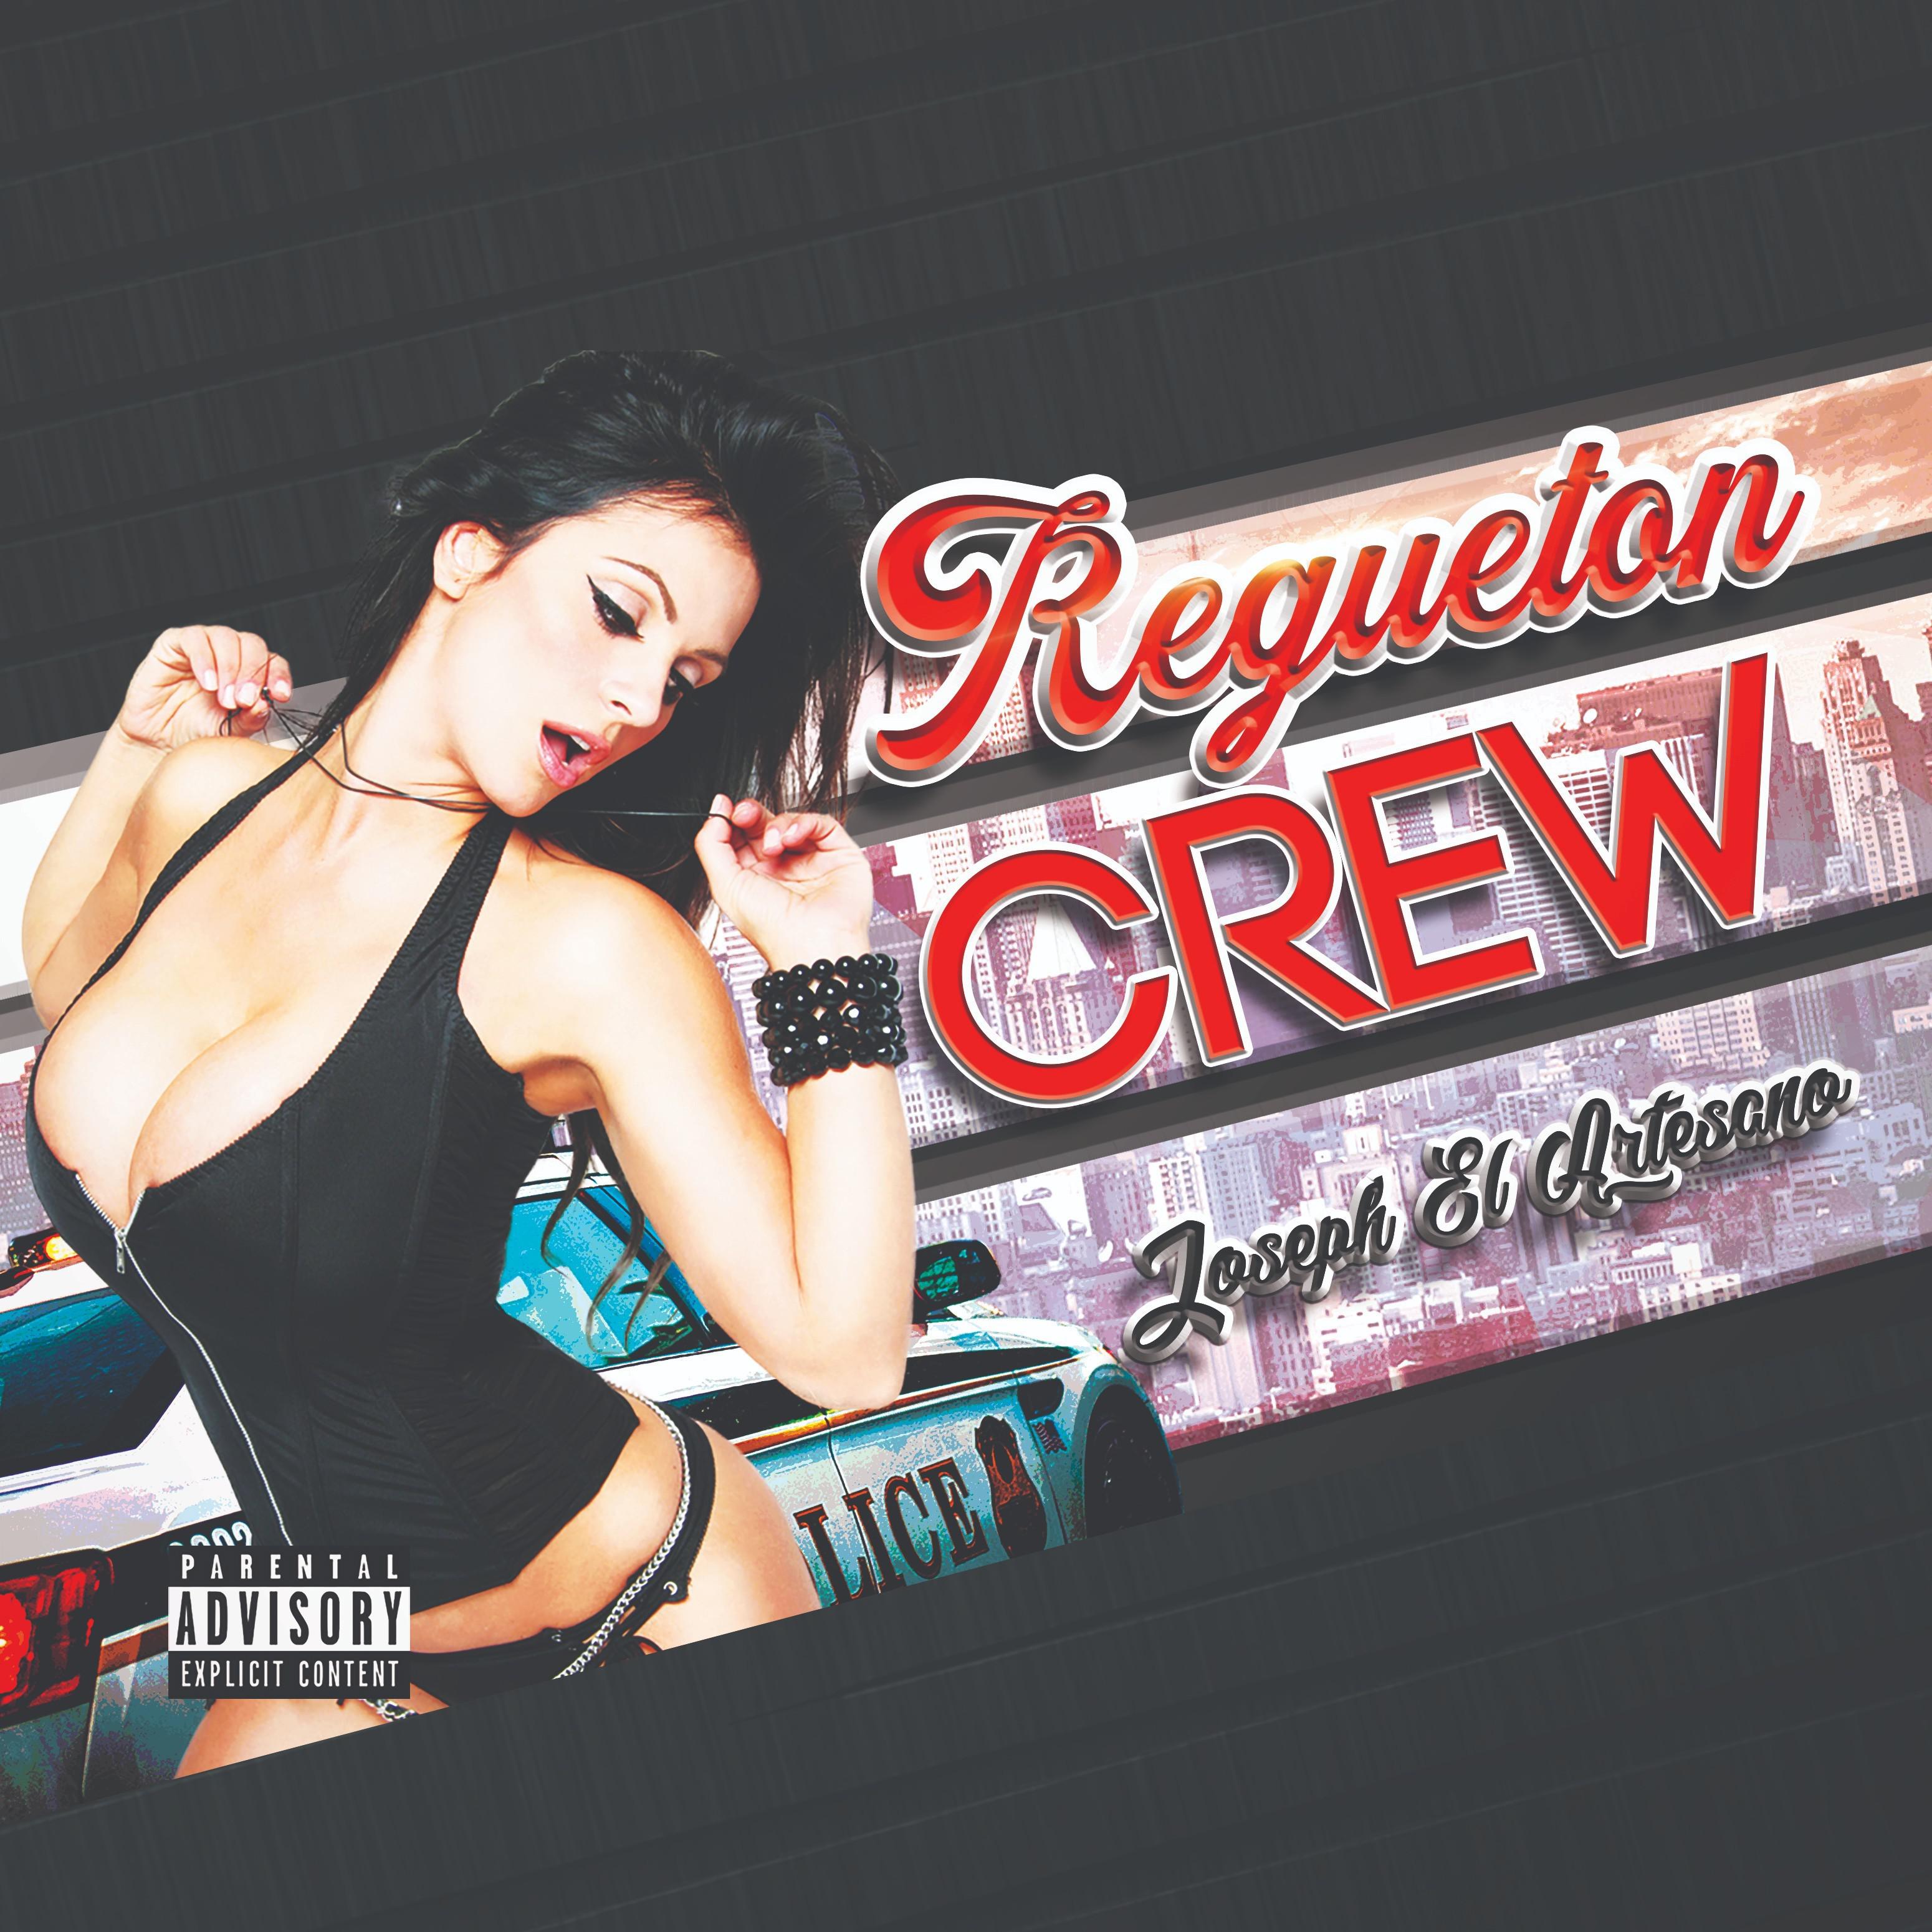 Regueton Crew